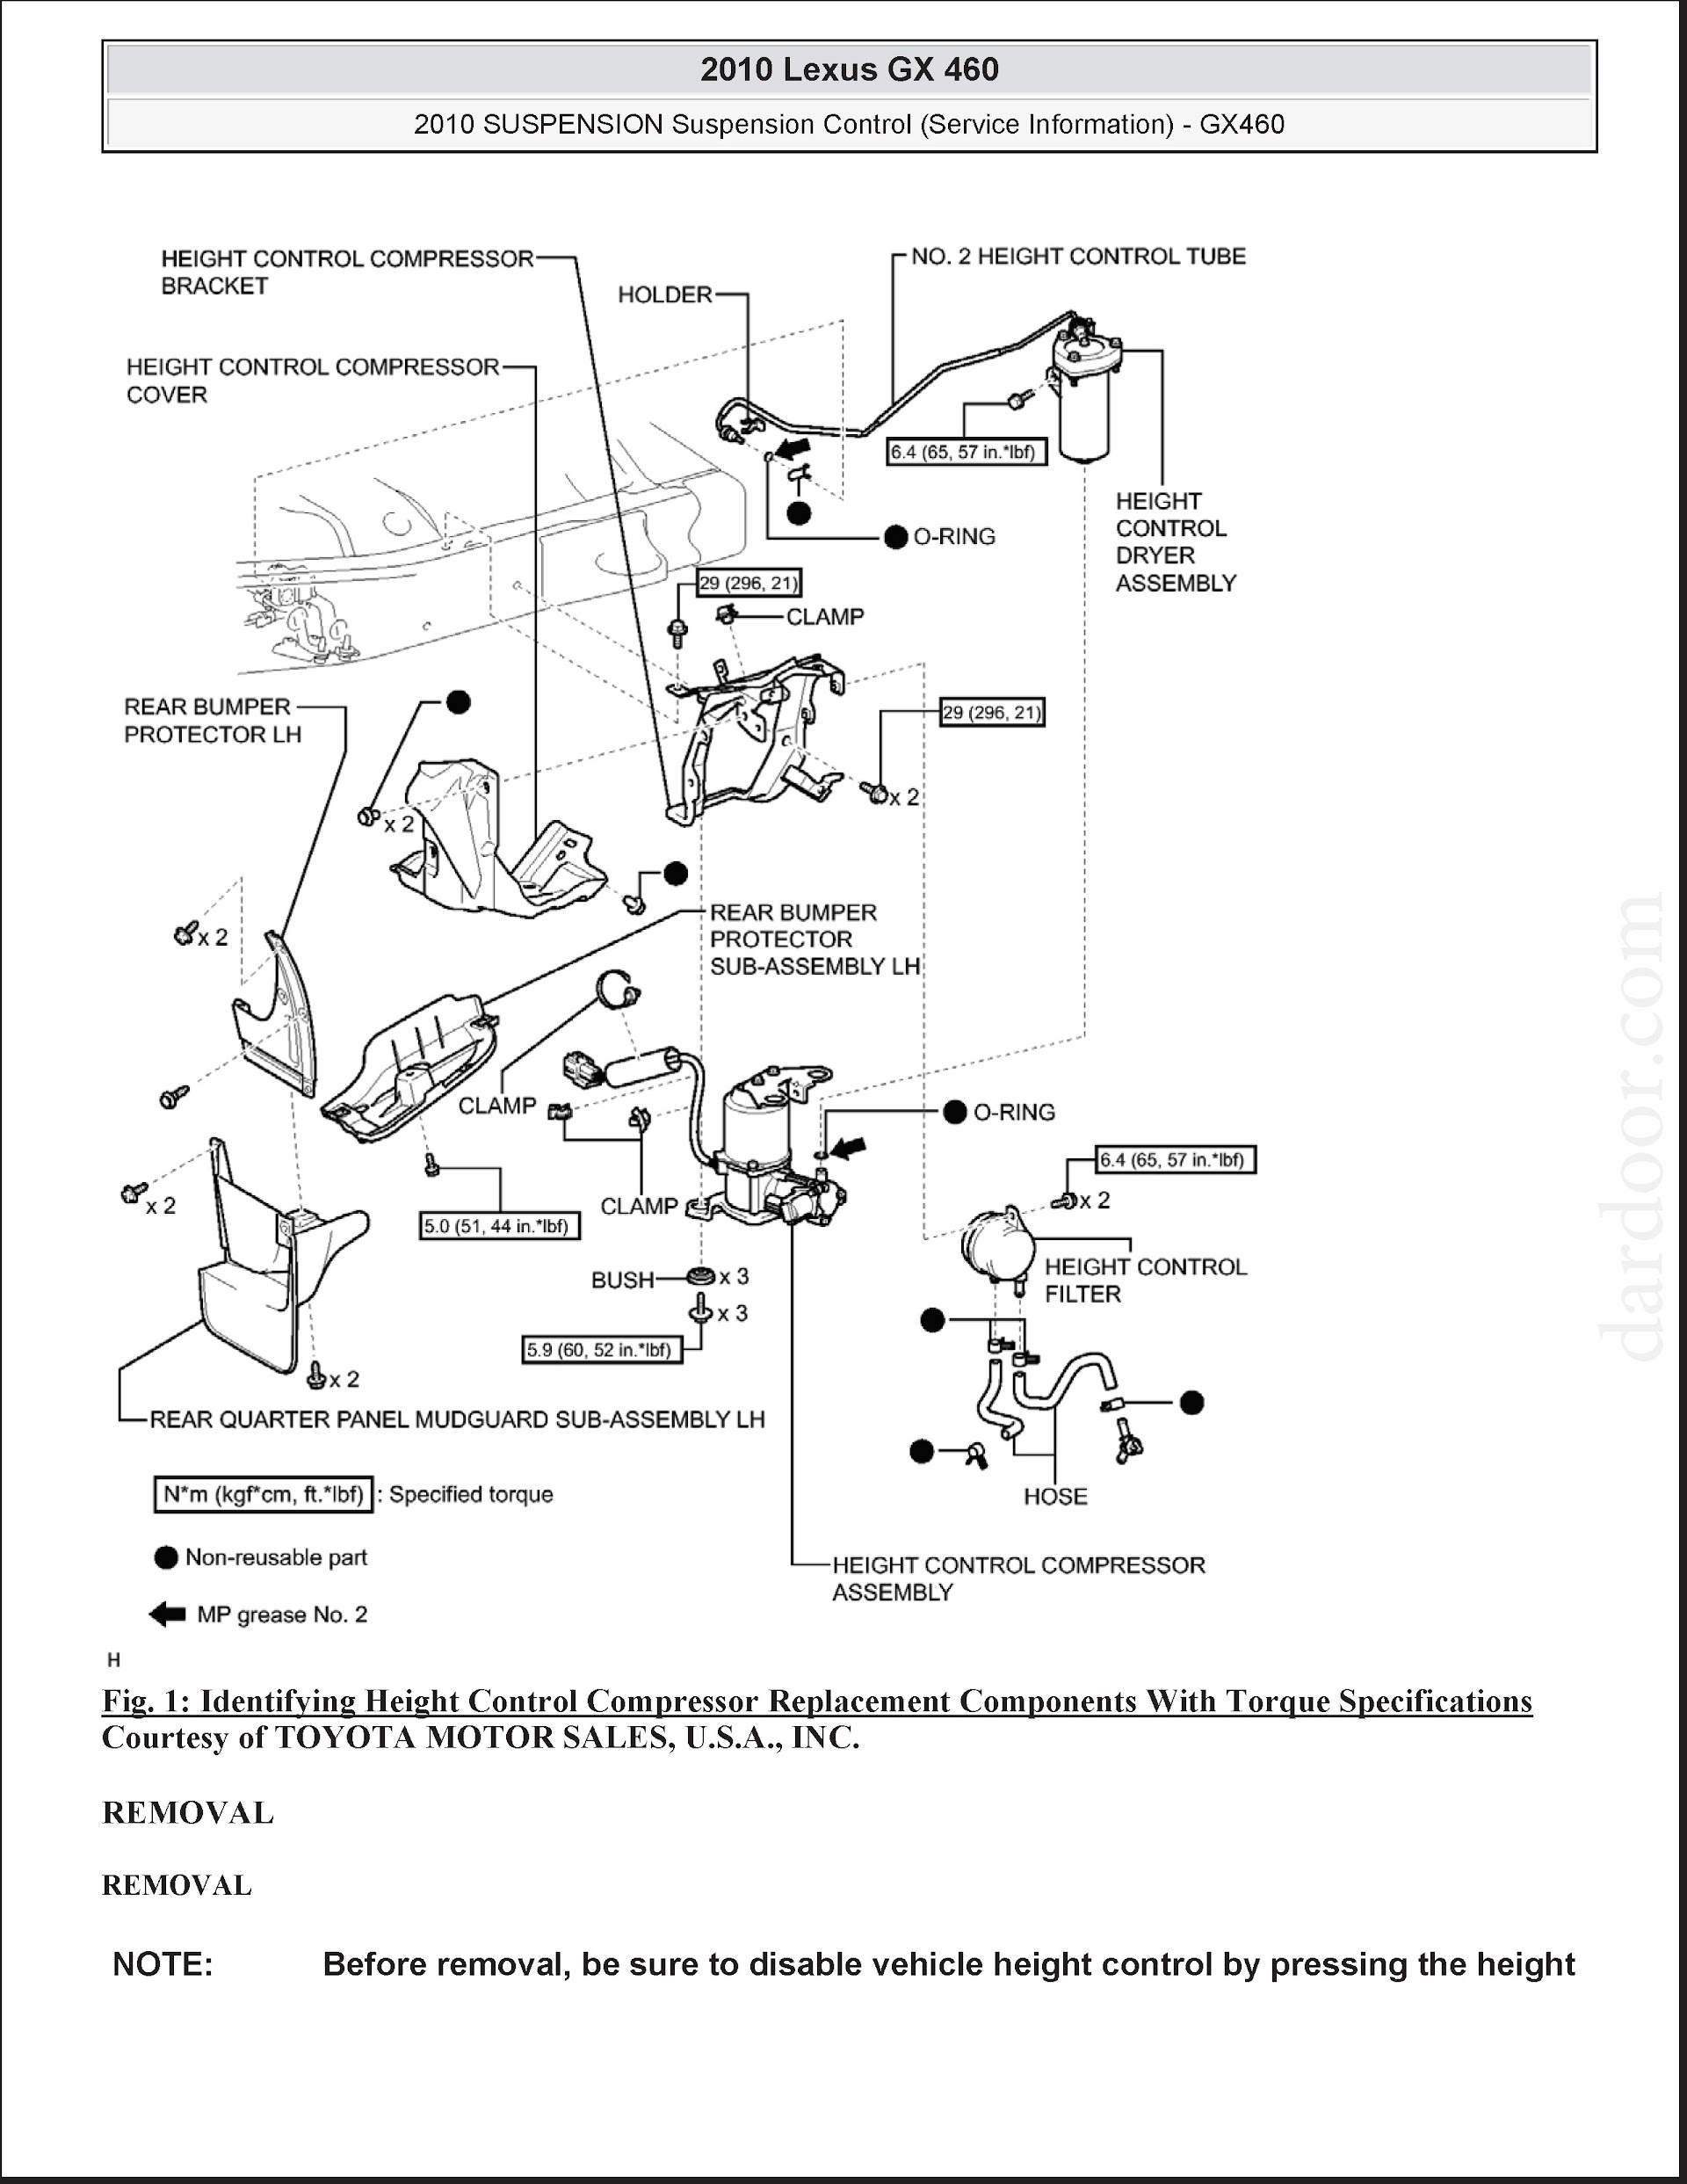 2010-2013 Lexus GX 460 Suspension Control Service Information